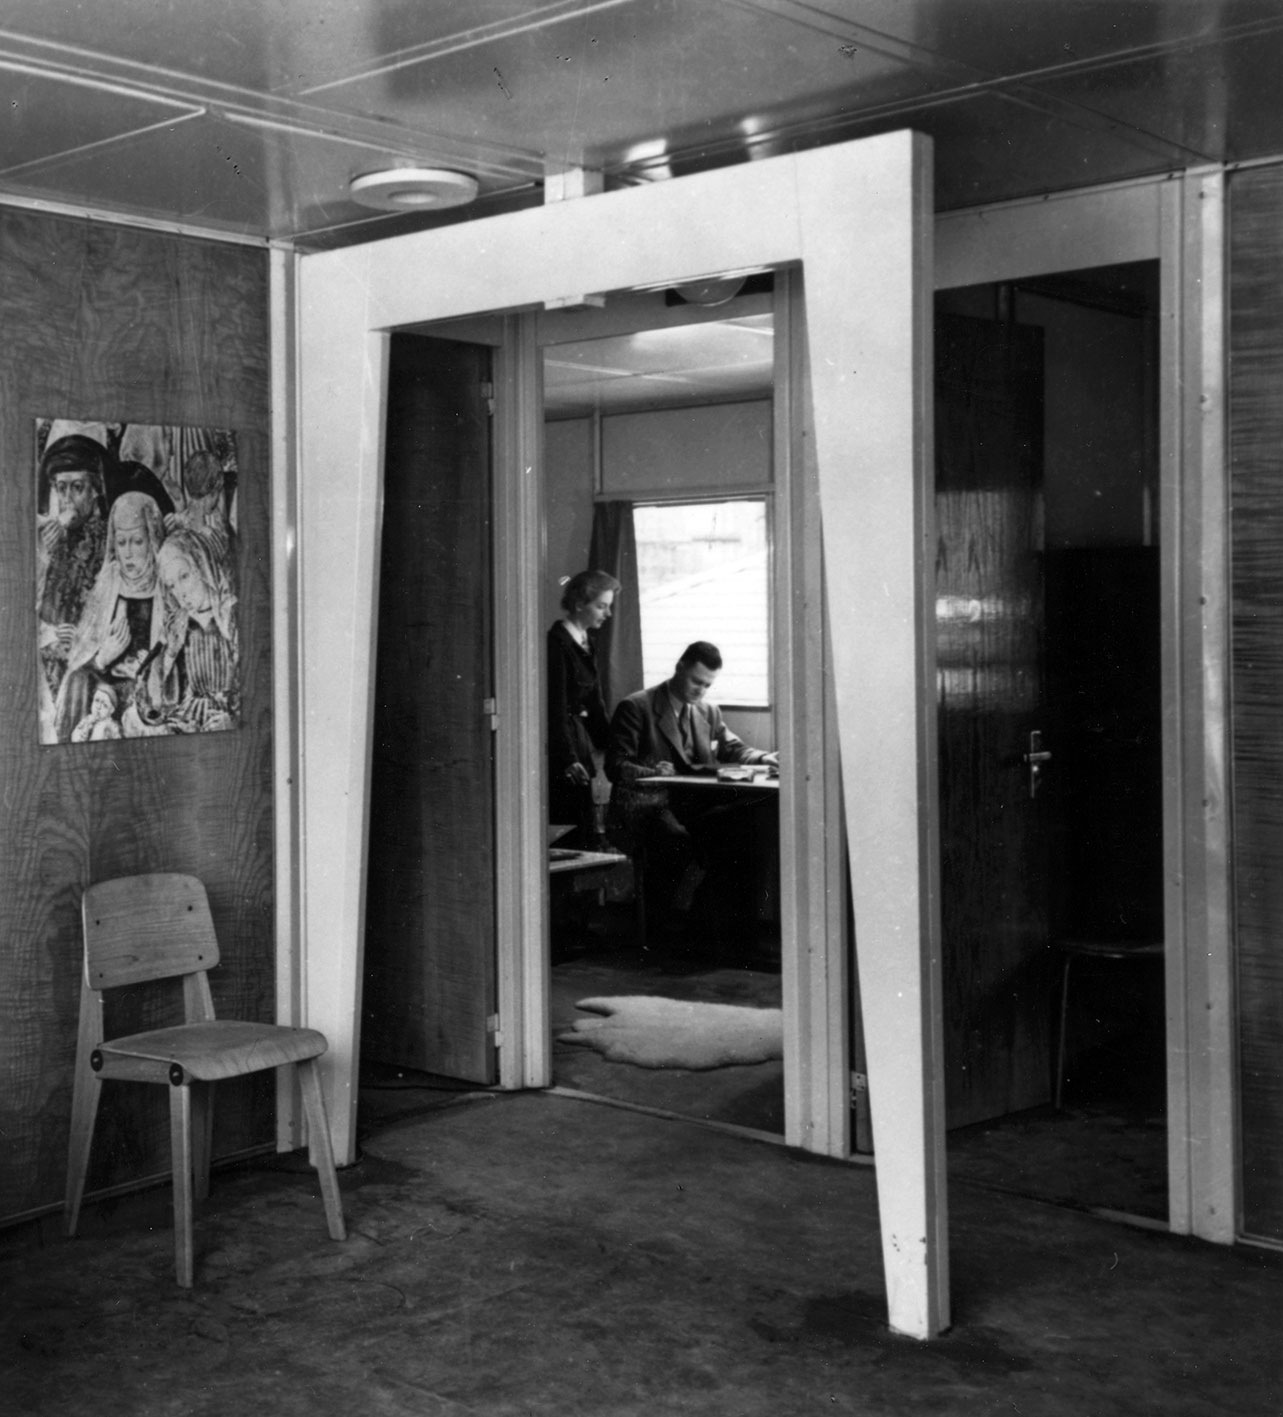 Prototype of the Métropole house assembled at the Housing section of the Salon des Arts Ménagers, Paris, 1950 (architect H. Prouvé). Interior view with demountable wooden chair no. 301.